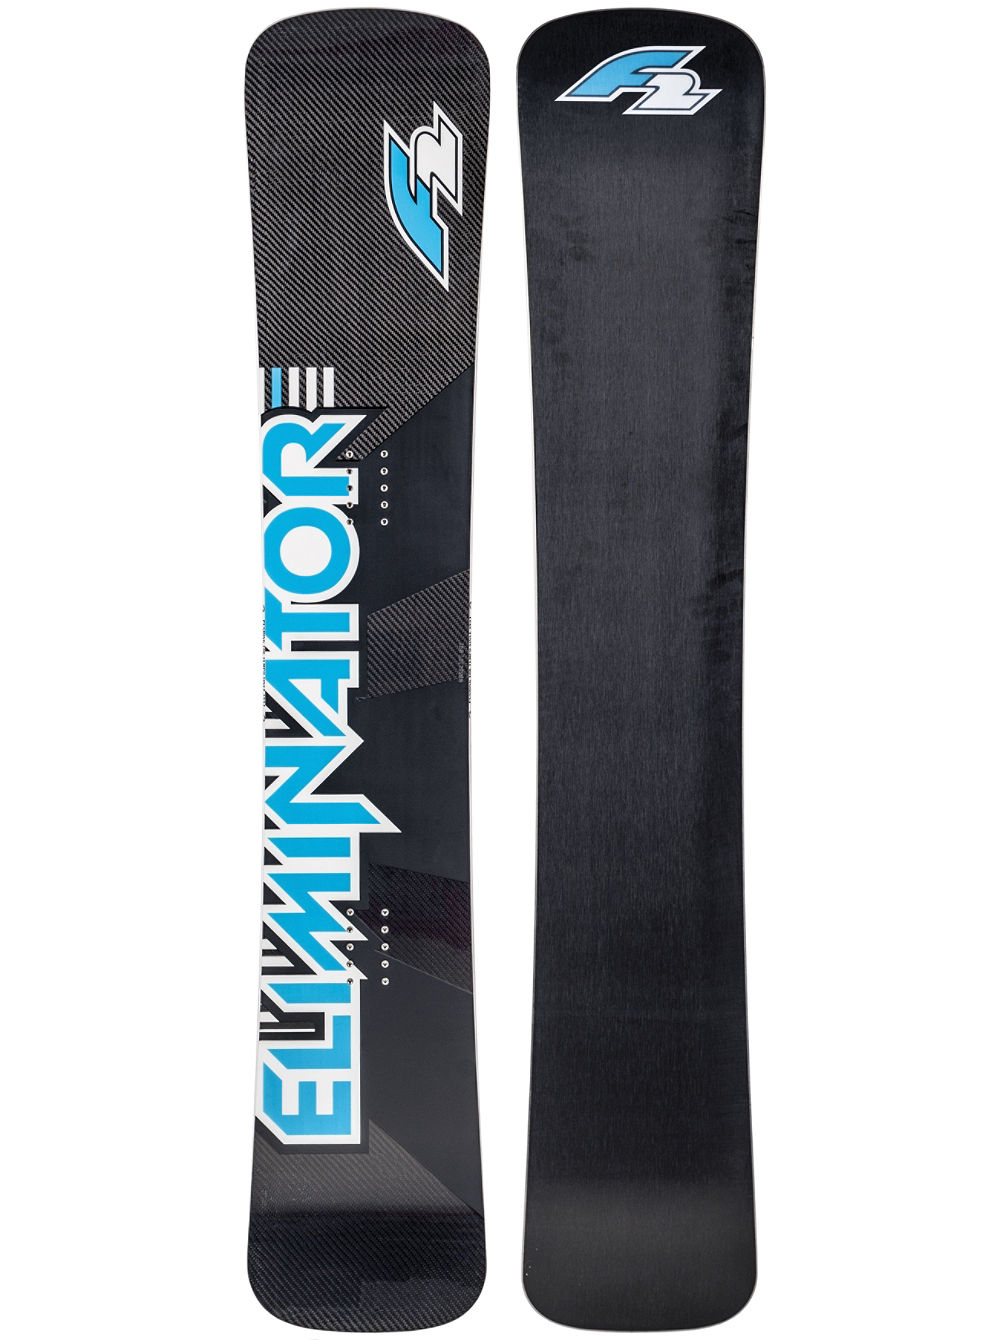 Eliminator WC Carbon 163 2019 Alpin Snowboard